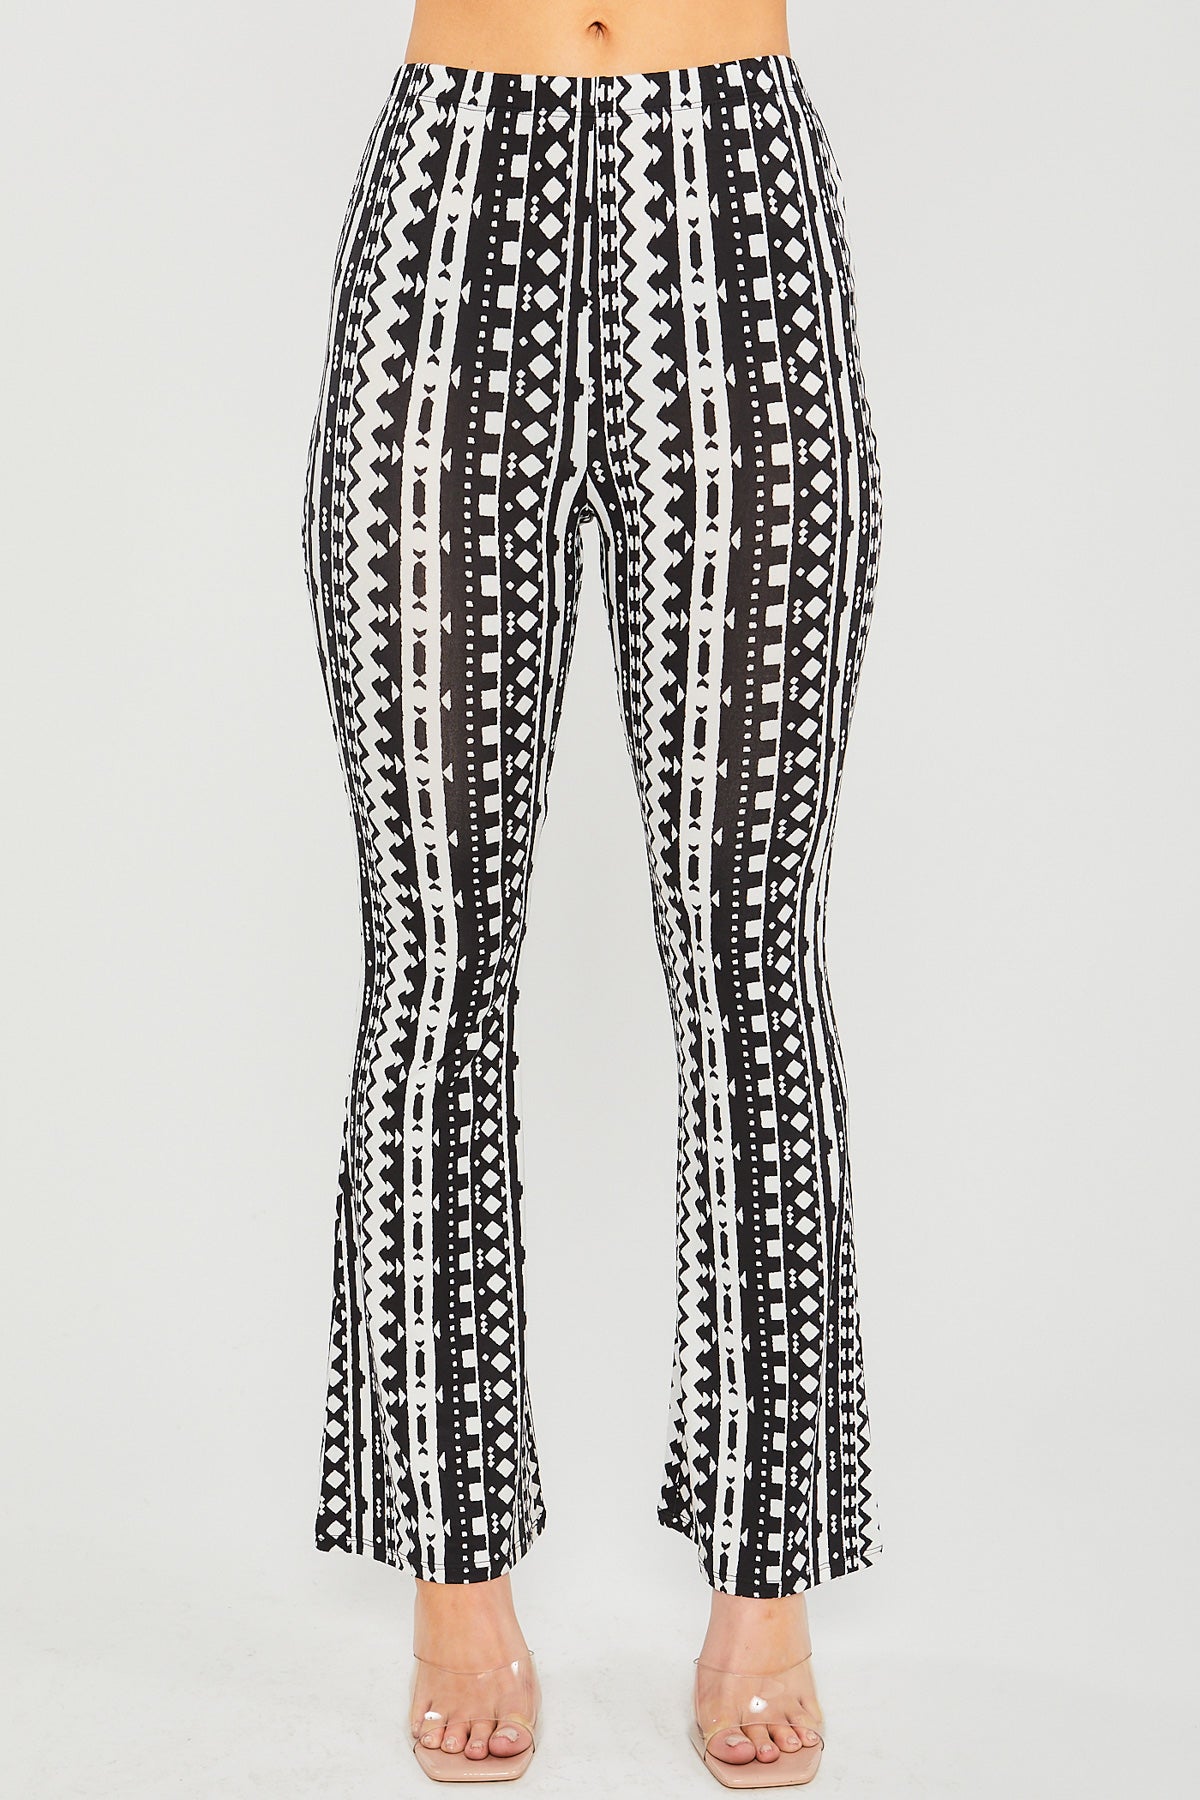 Knit Print Long Flare Pants - LA7 ONLINE Black / M